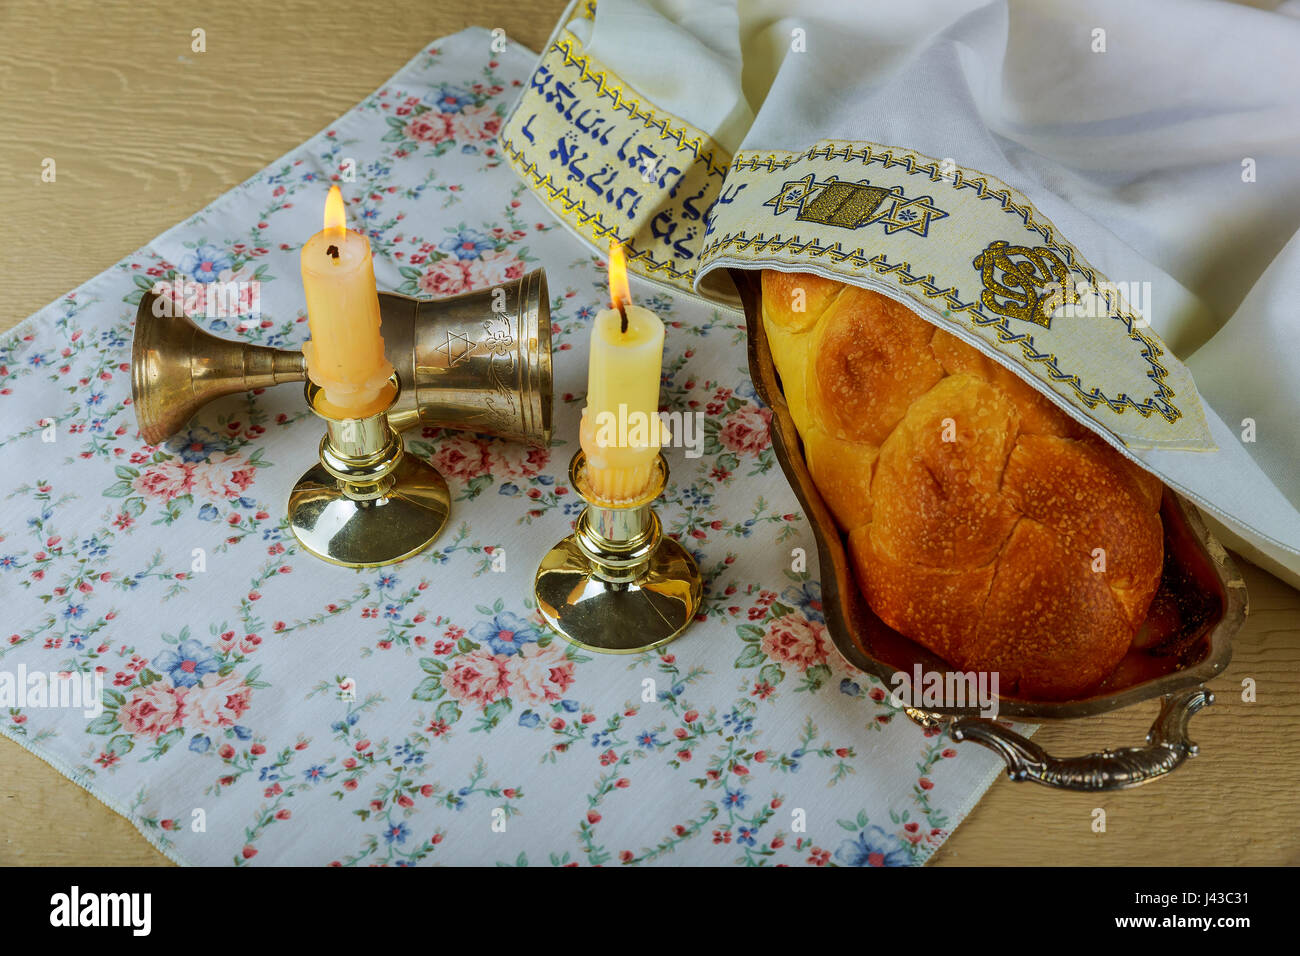 https://c8.alamy.com/comp/J43C31/shabbat-shalom-traditional-jewish-sabbath-ritual-challah-bread-wine-J43C31.jpg